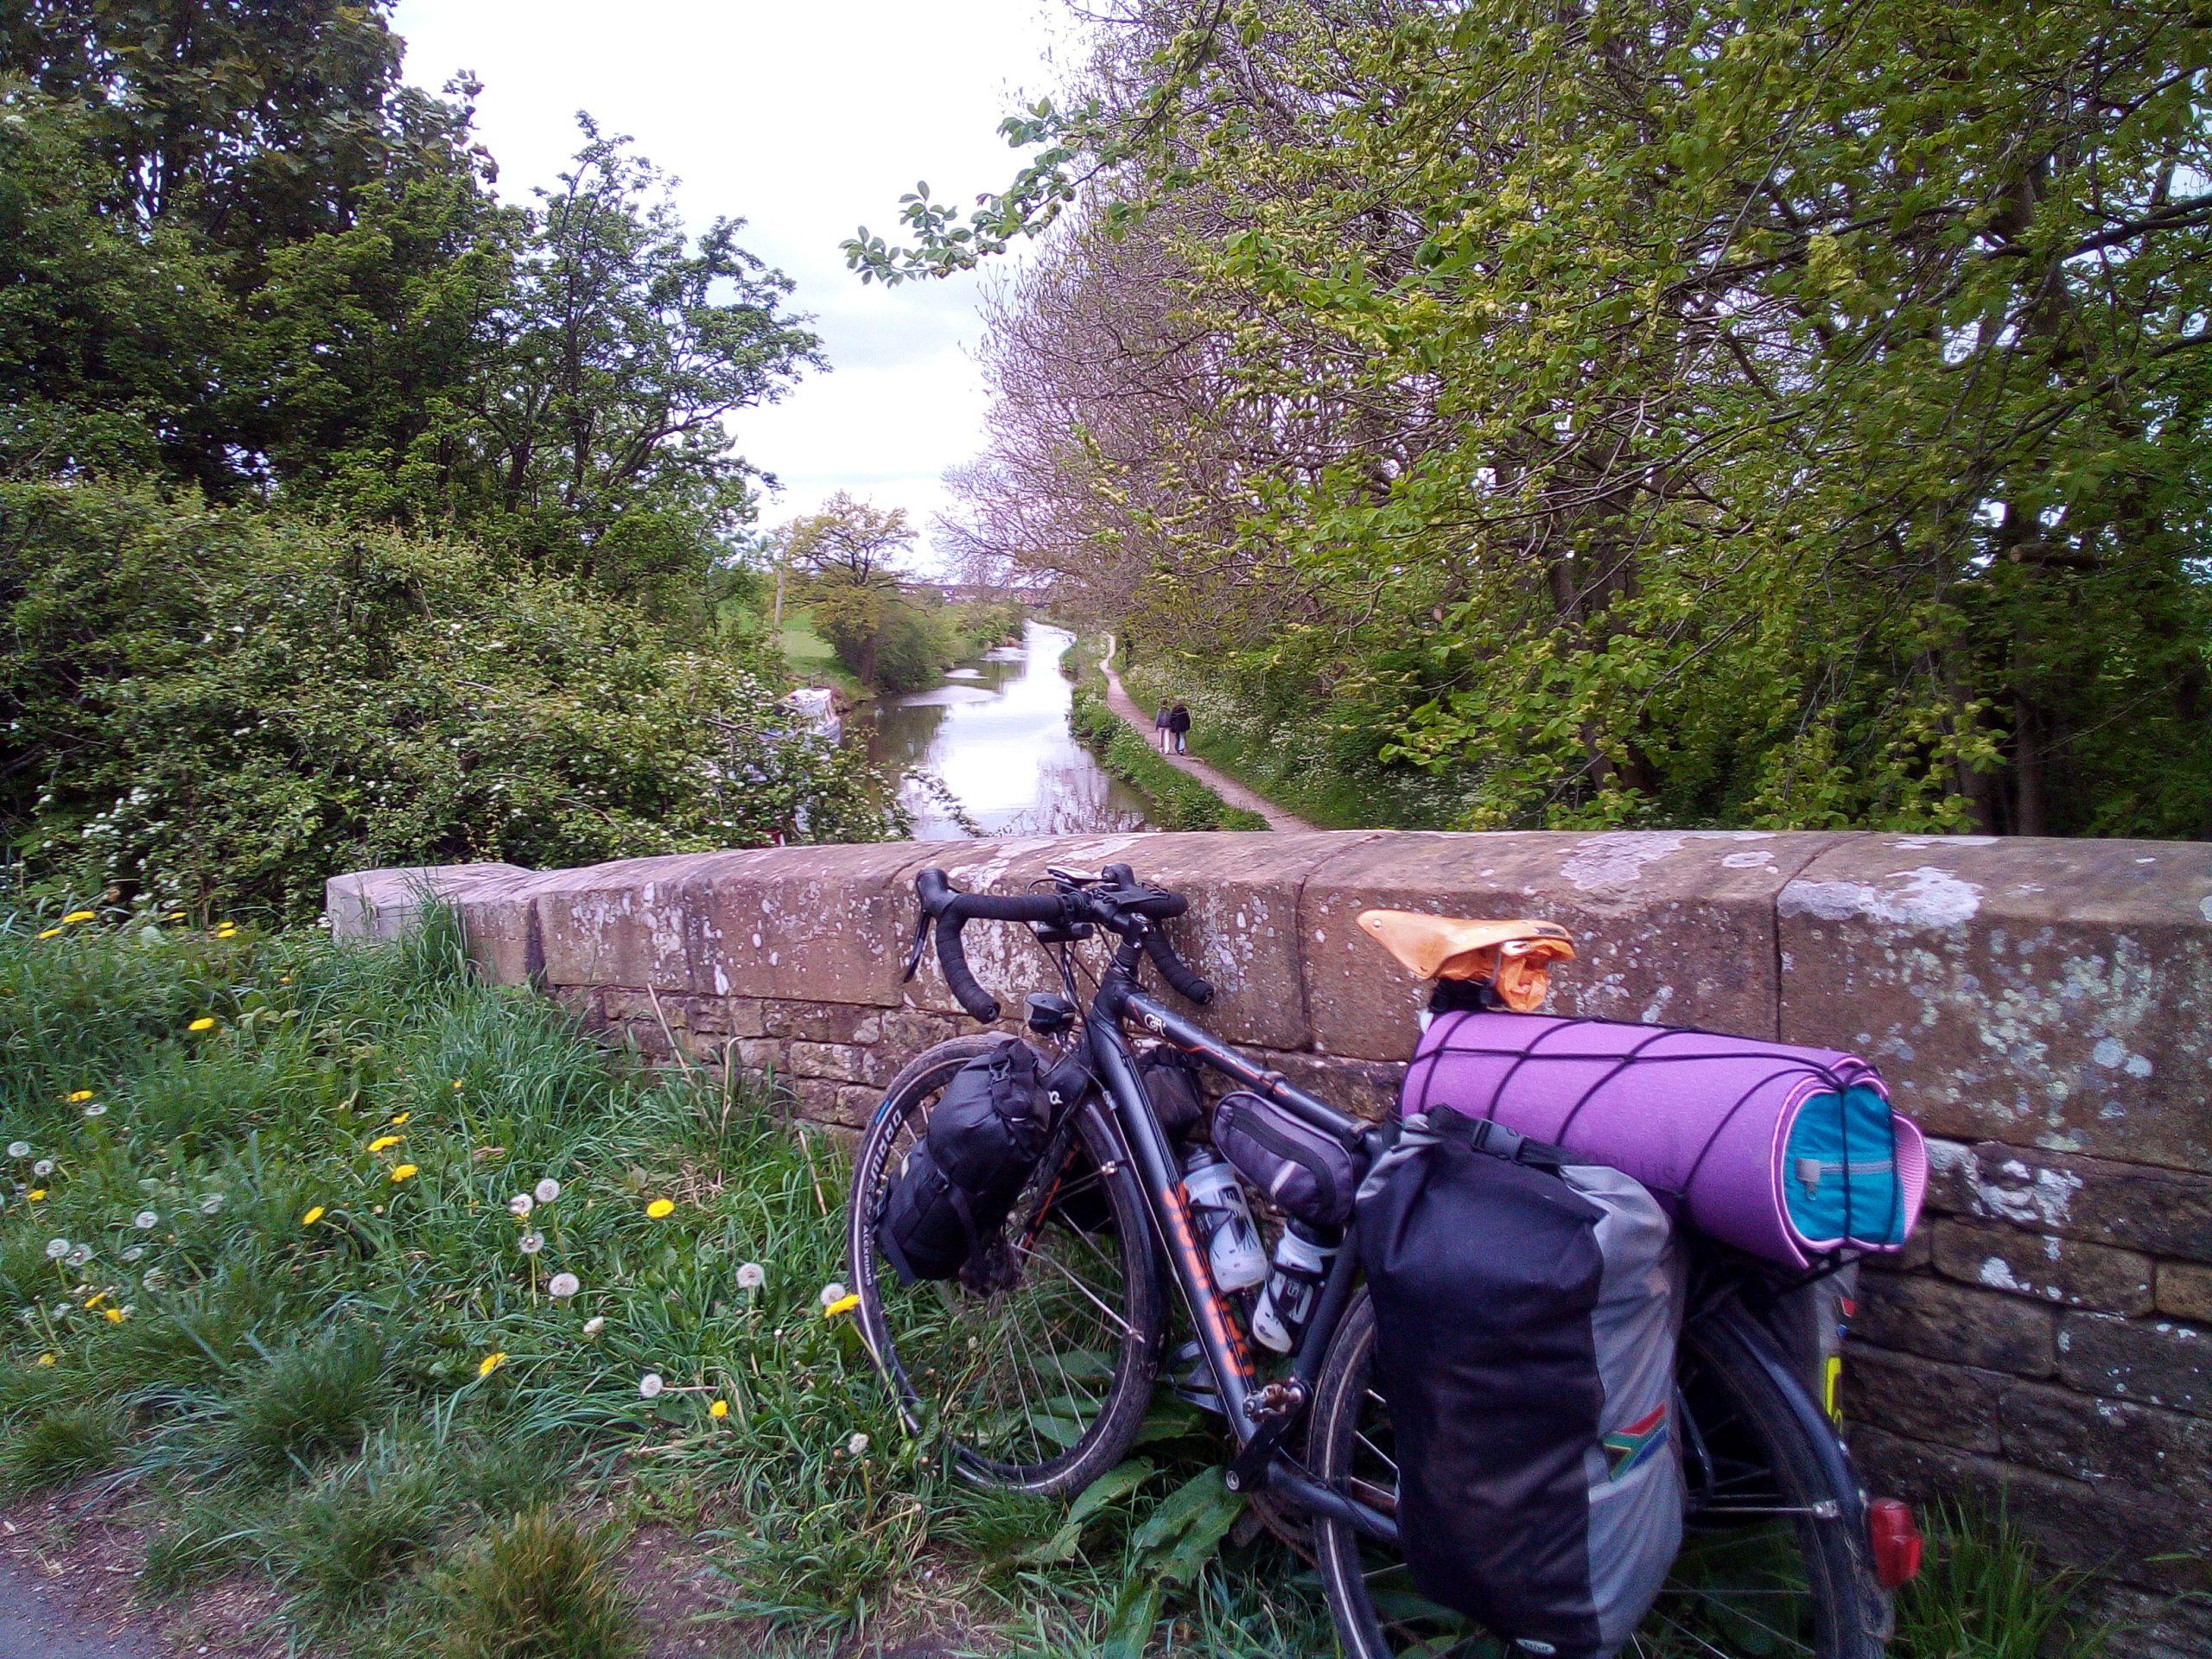 My bike, somewhere along the Macclesfield canal